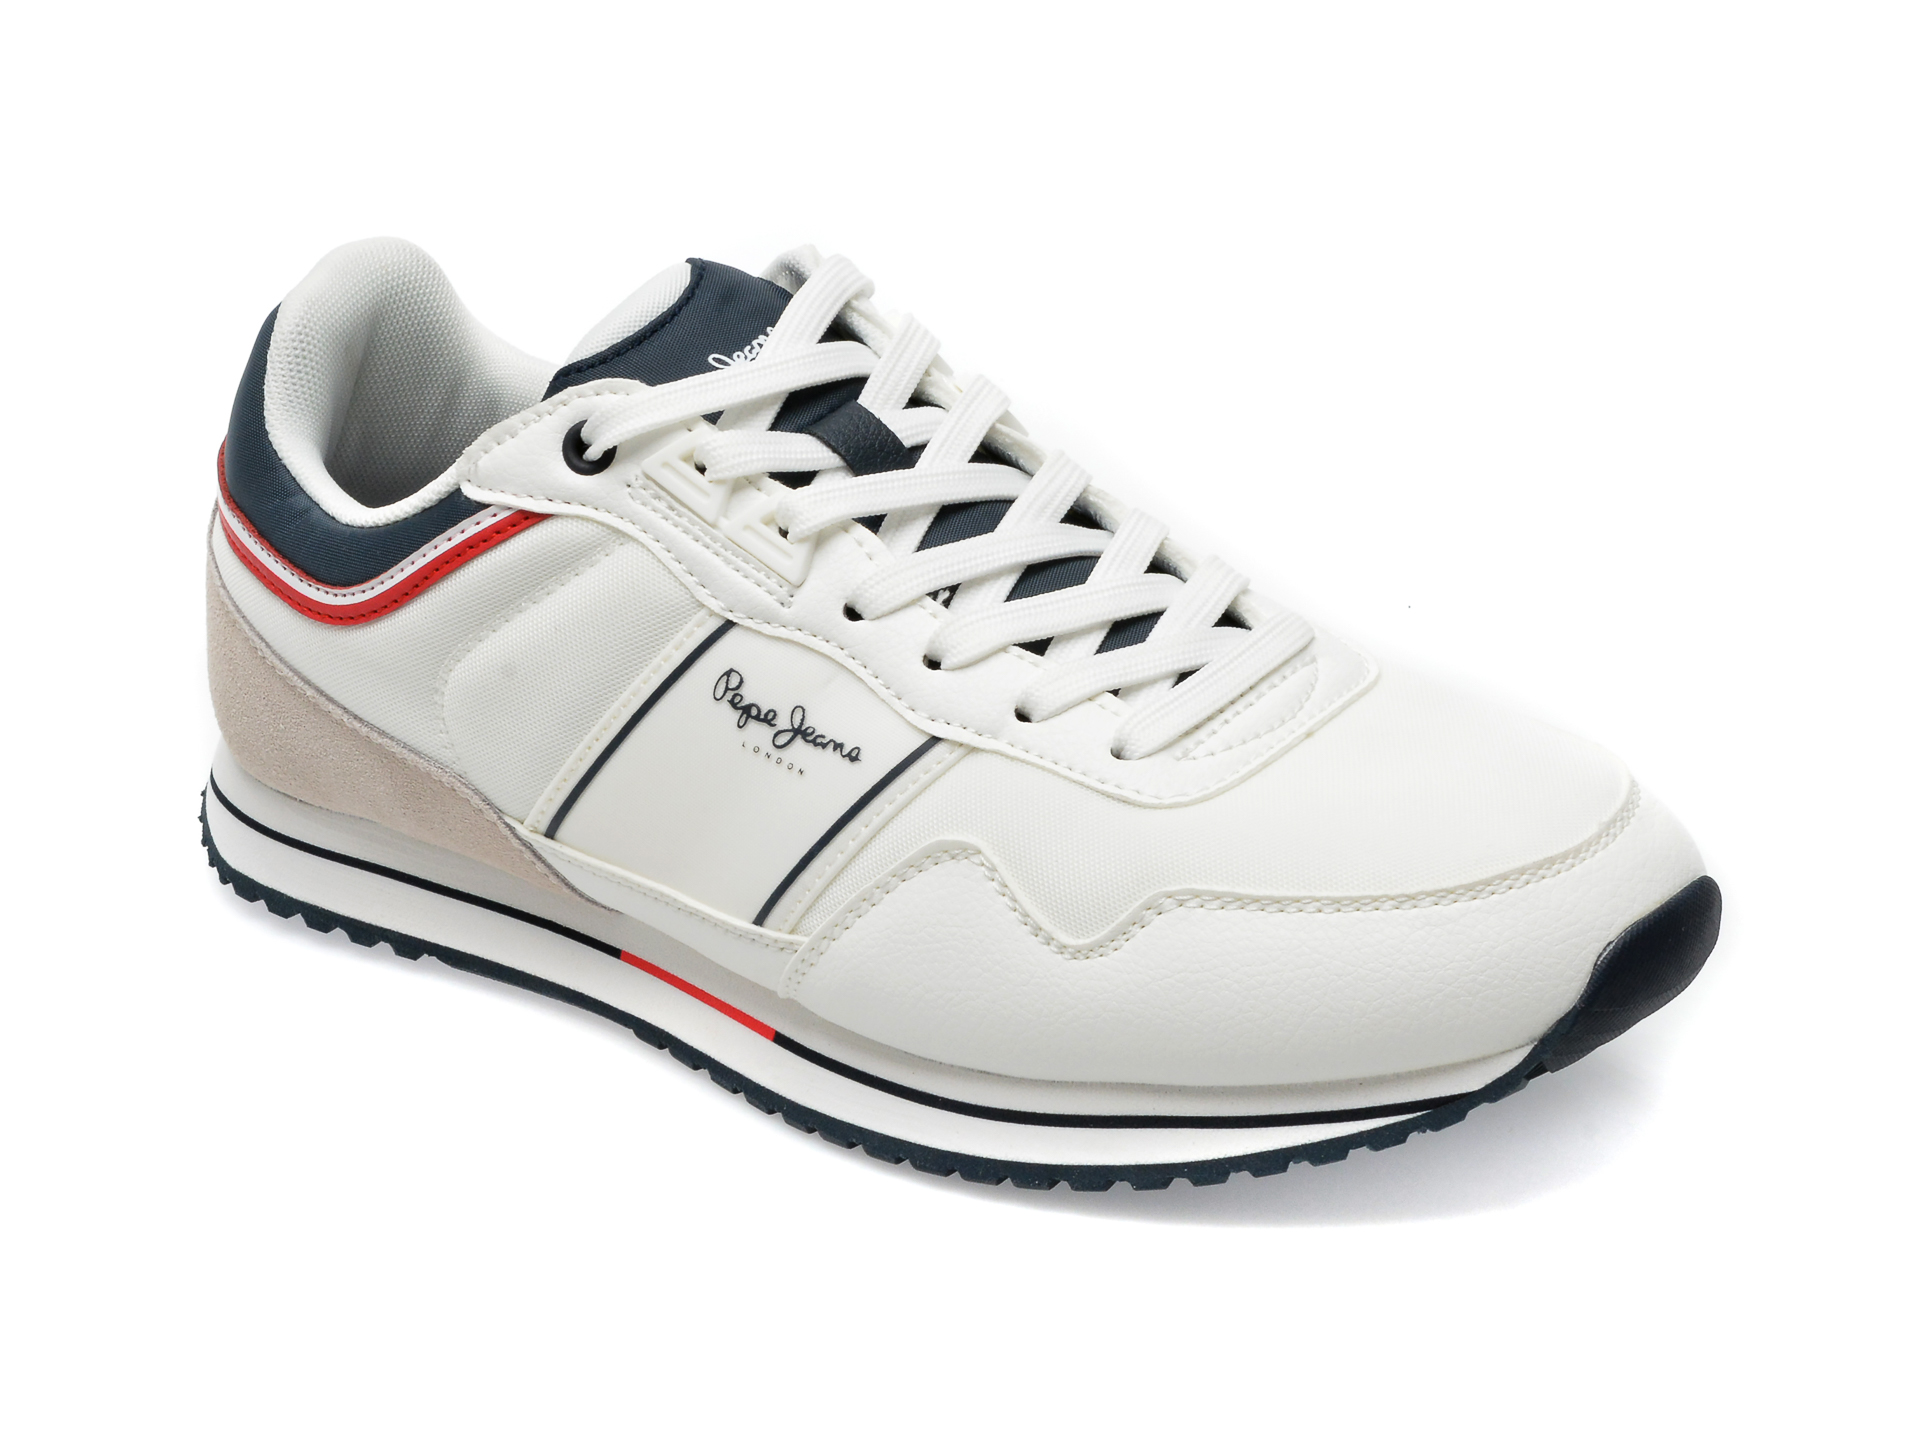 Pantofi sport PEPE JEANS albi, MS30907, din material textil si piele ecologica /barbati/pantofi